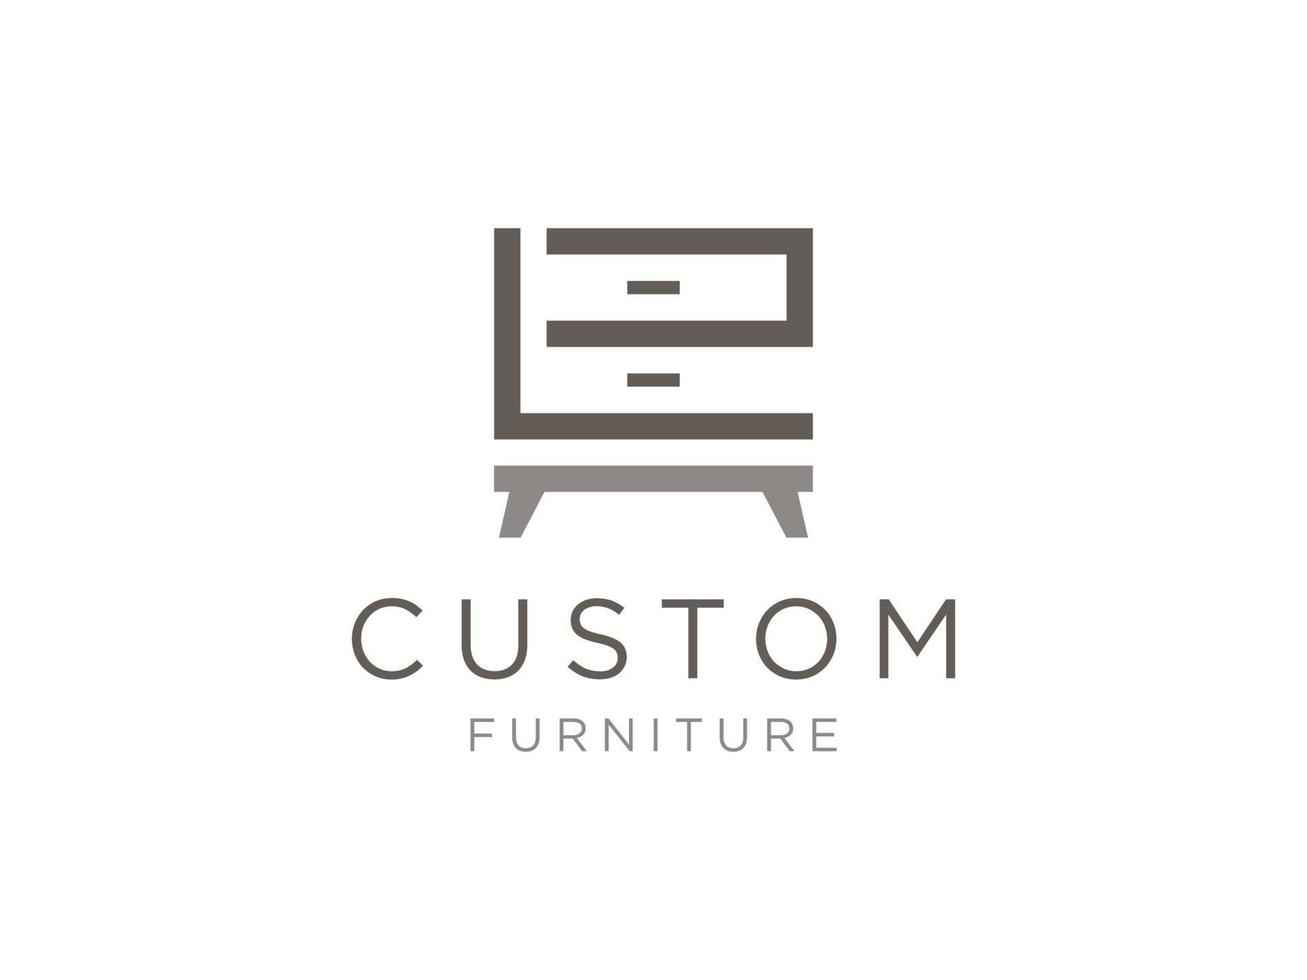 Letter L with wooden furniture concept logo design inspiration vector